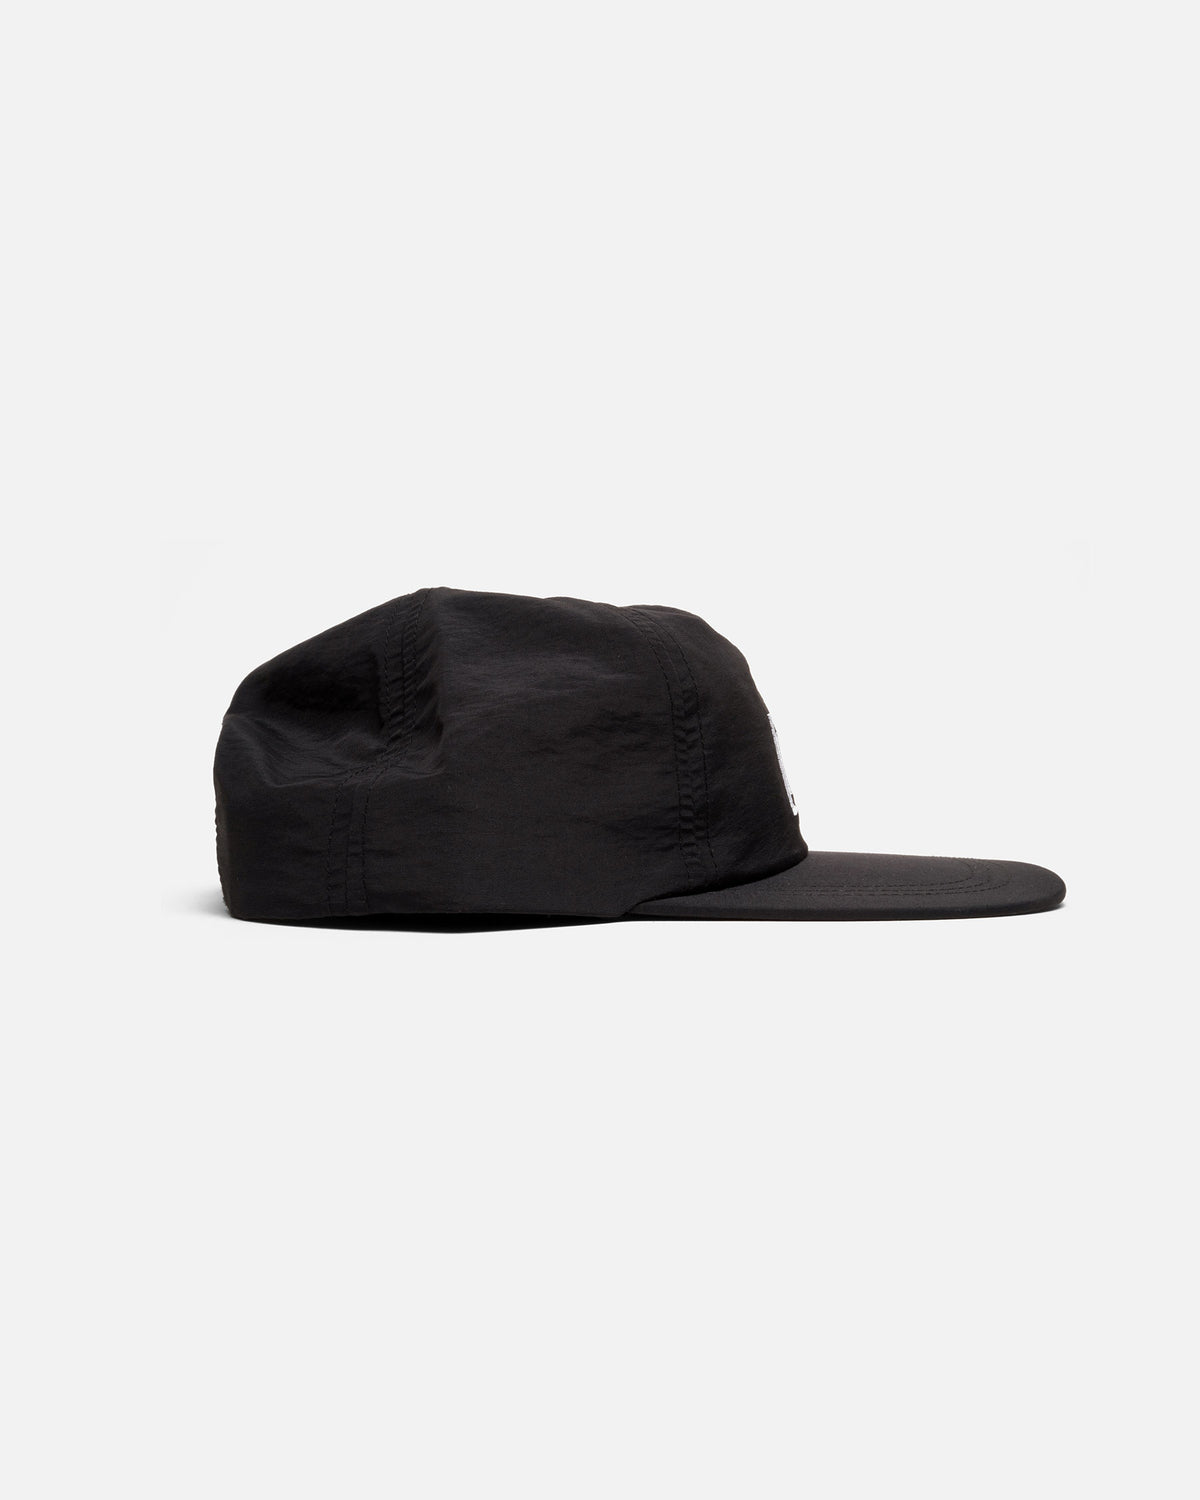 NYLON CAP - BLACK | SIDE